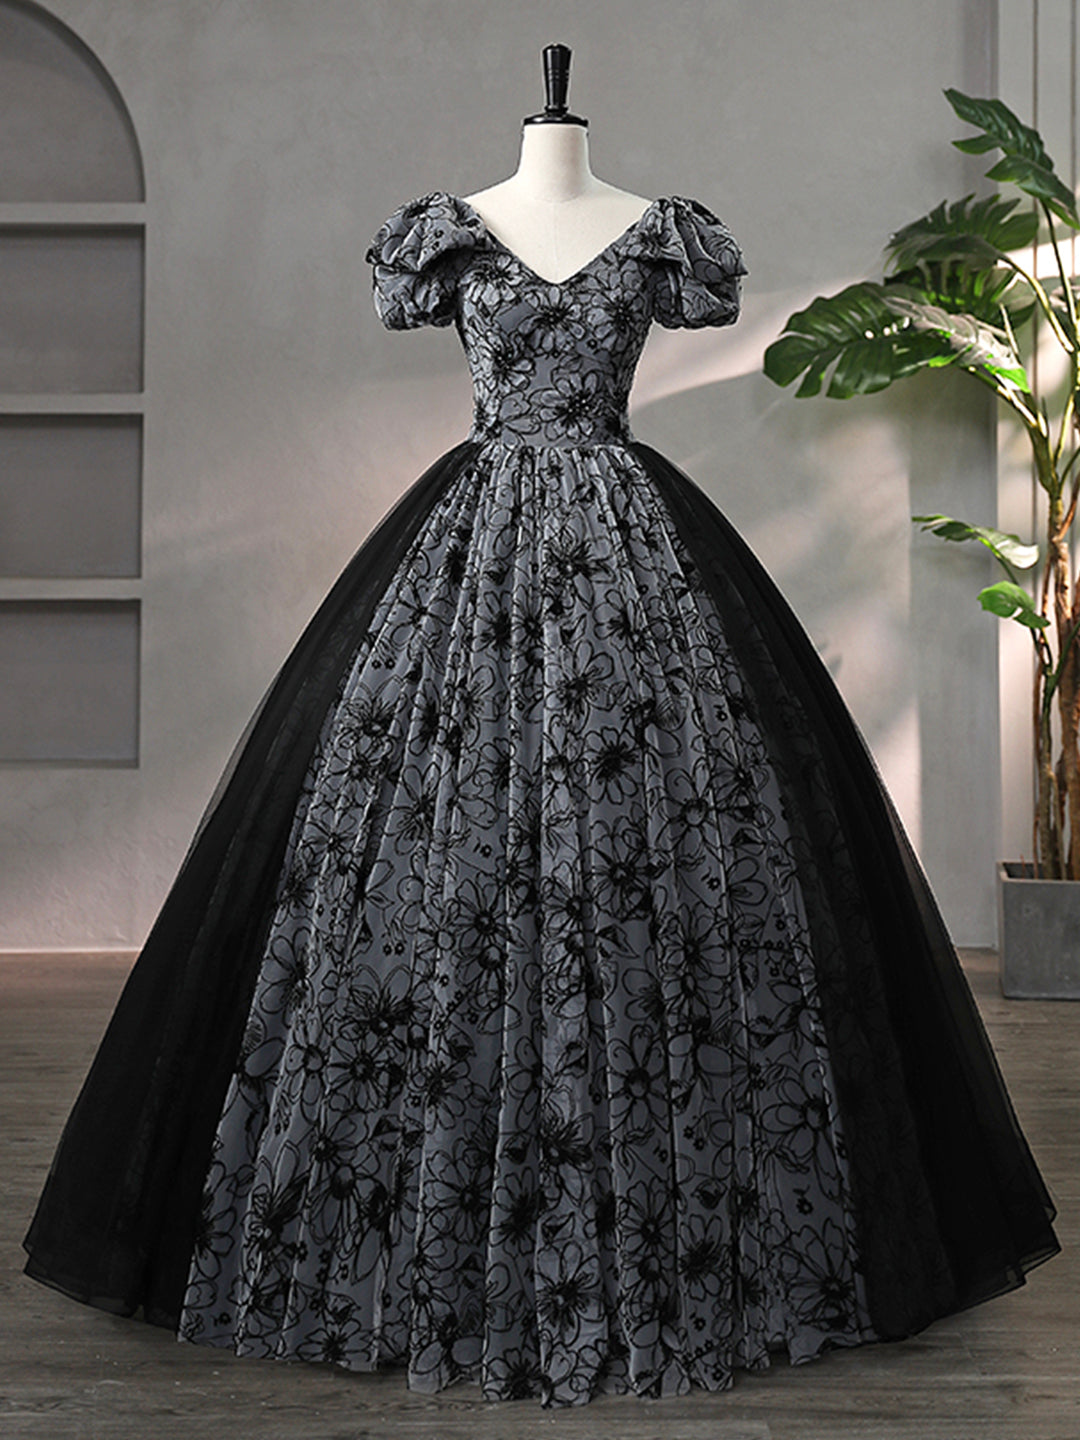 Beautiful Black Rhinestone Flower Corset Prom Dress, Black V-Neck Short Sleeve Evening Dress outfit, Bridesmaid Dress Online